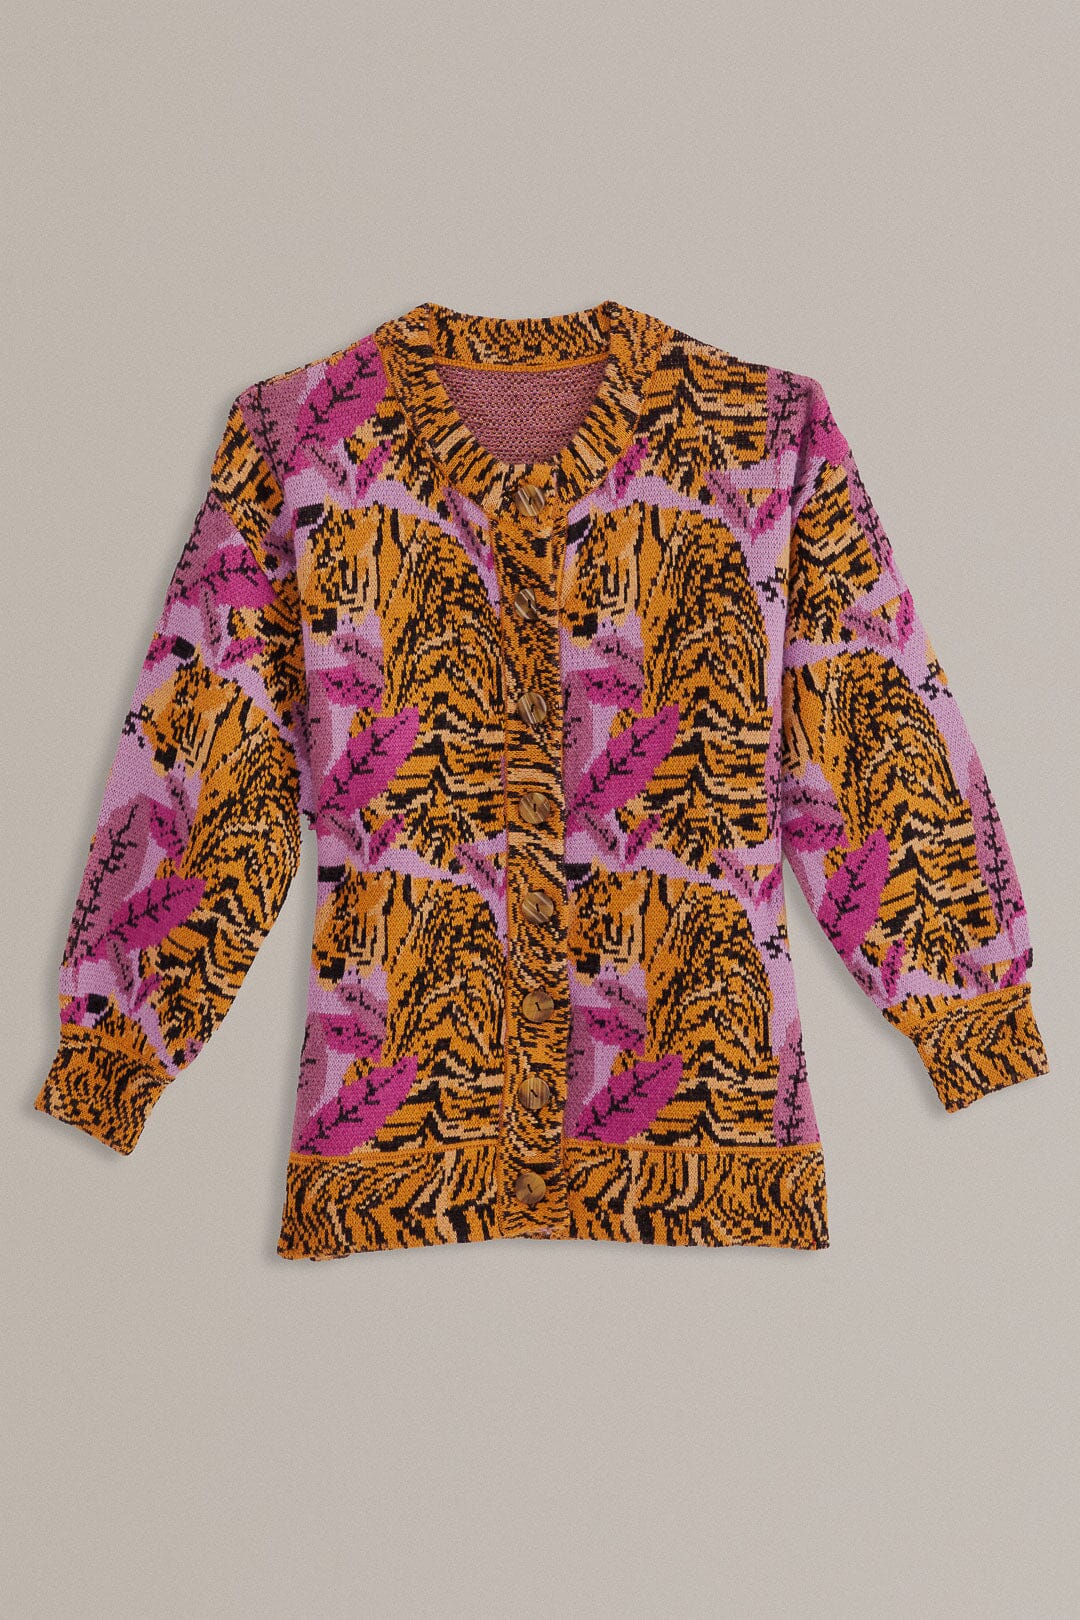 Tiger Leaves Knit Cardigan